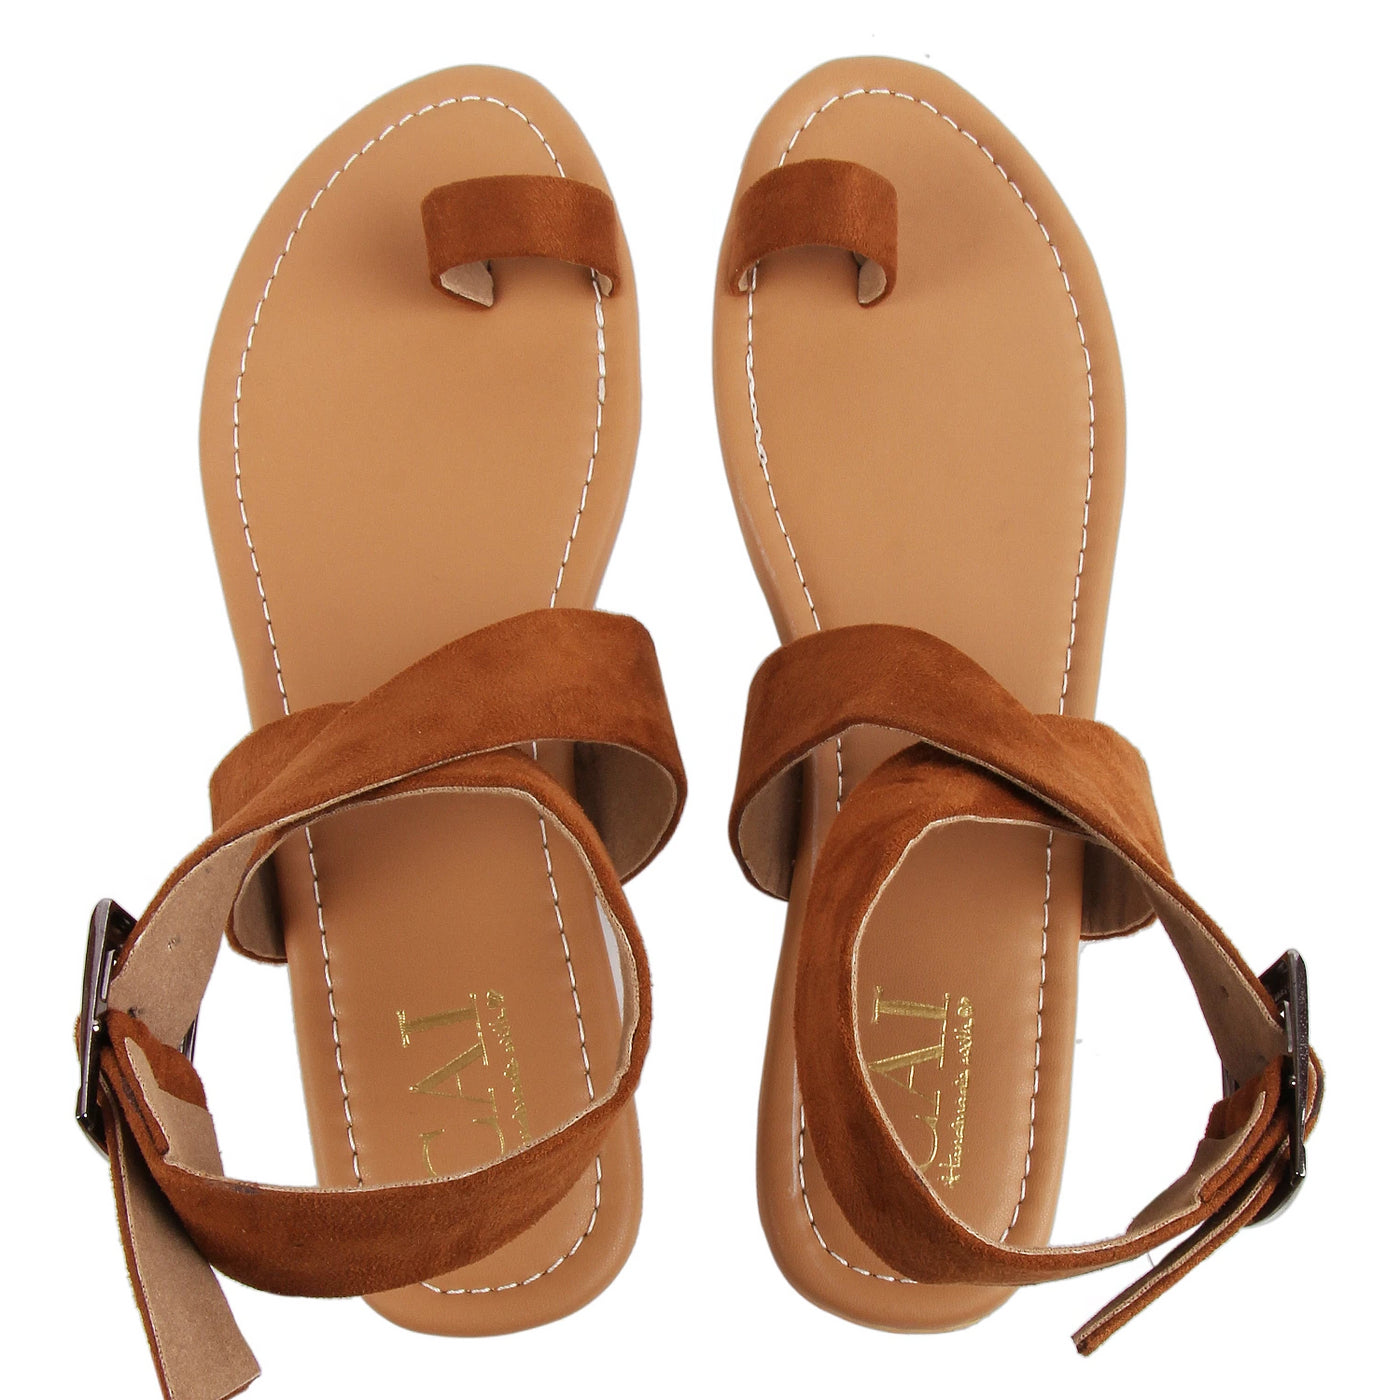 Lulus Beige Toe-Loop Sandals - Slide Sandals - Flat Sandals